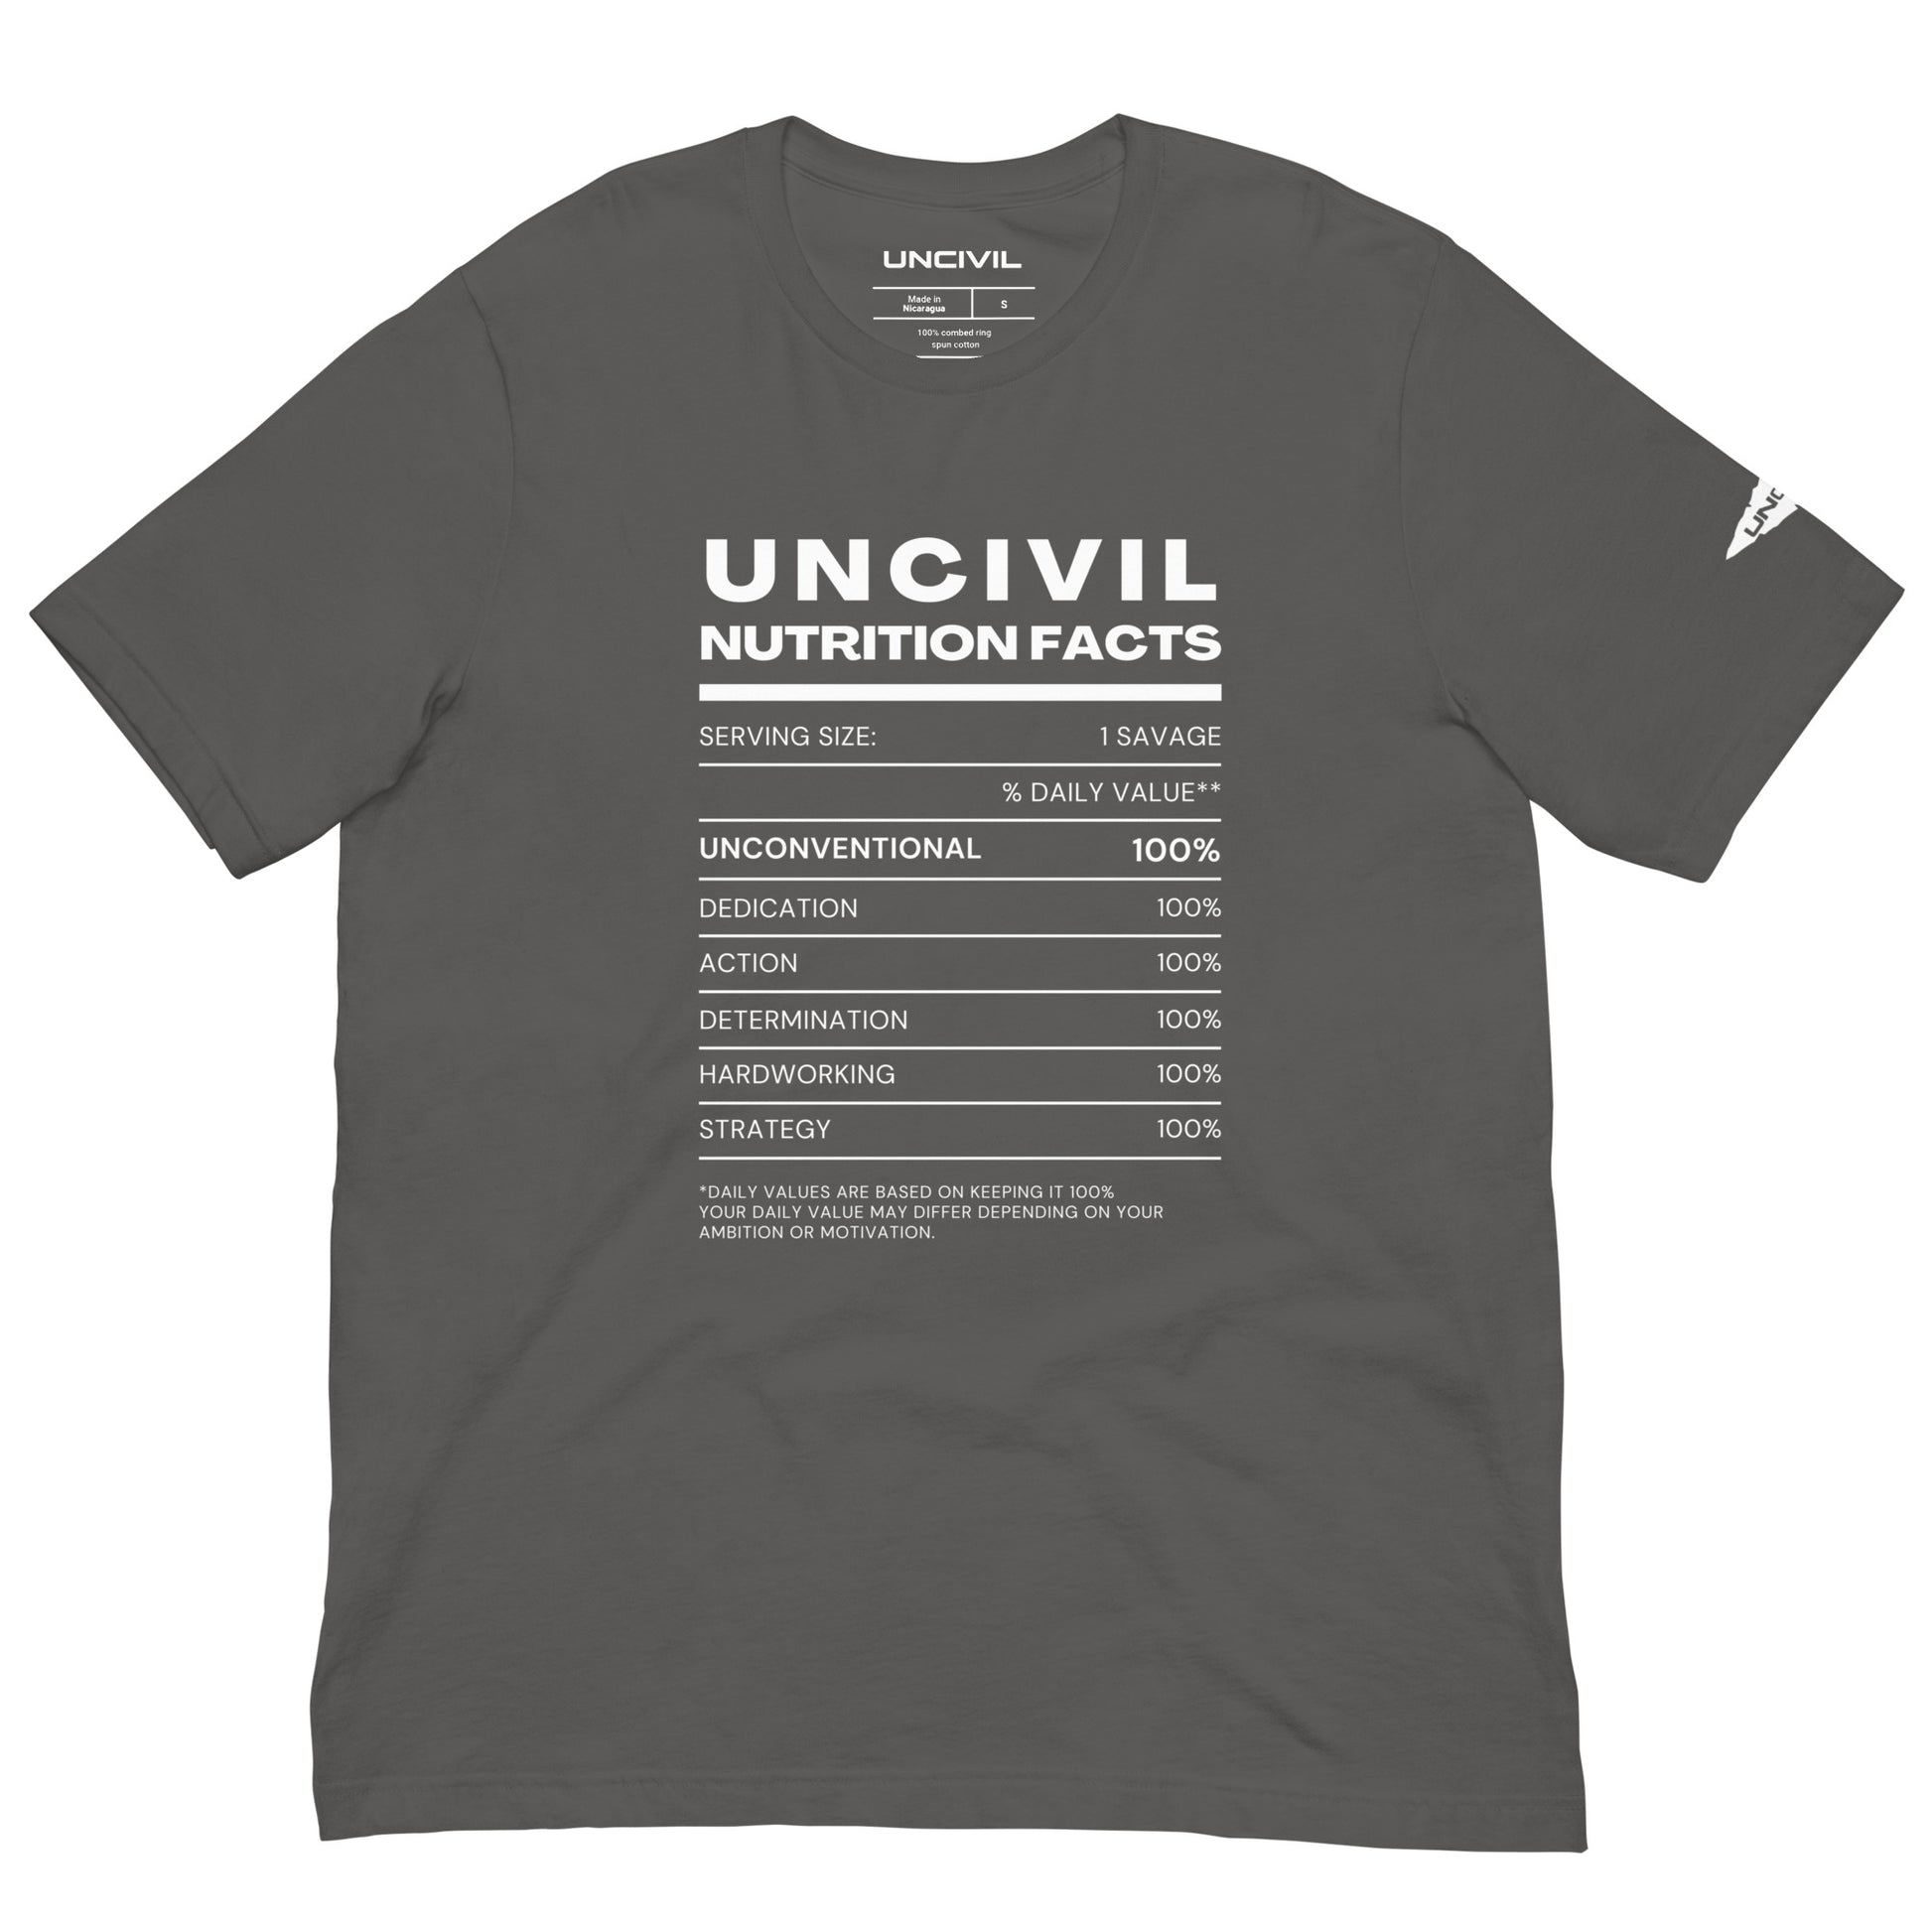 Our UNCIVIL Nutritional facts, Unconventional, dedicated, action, determination, hardworking, & strategy. Asphalt unisex shirt.